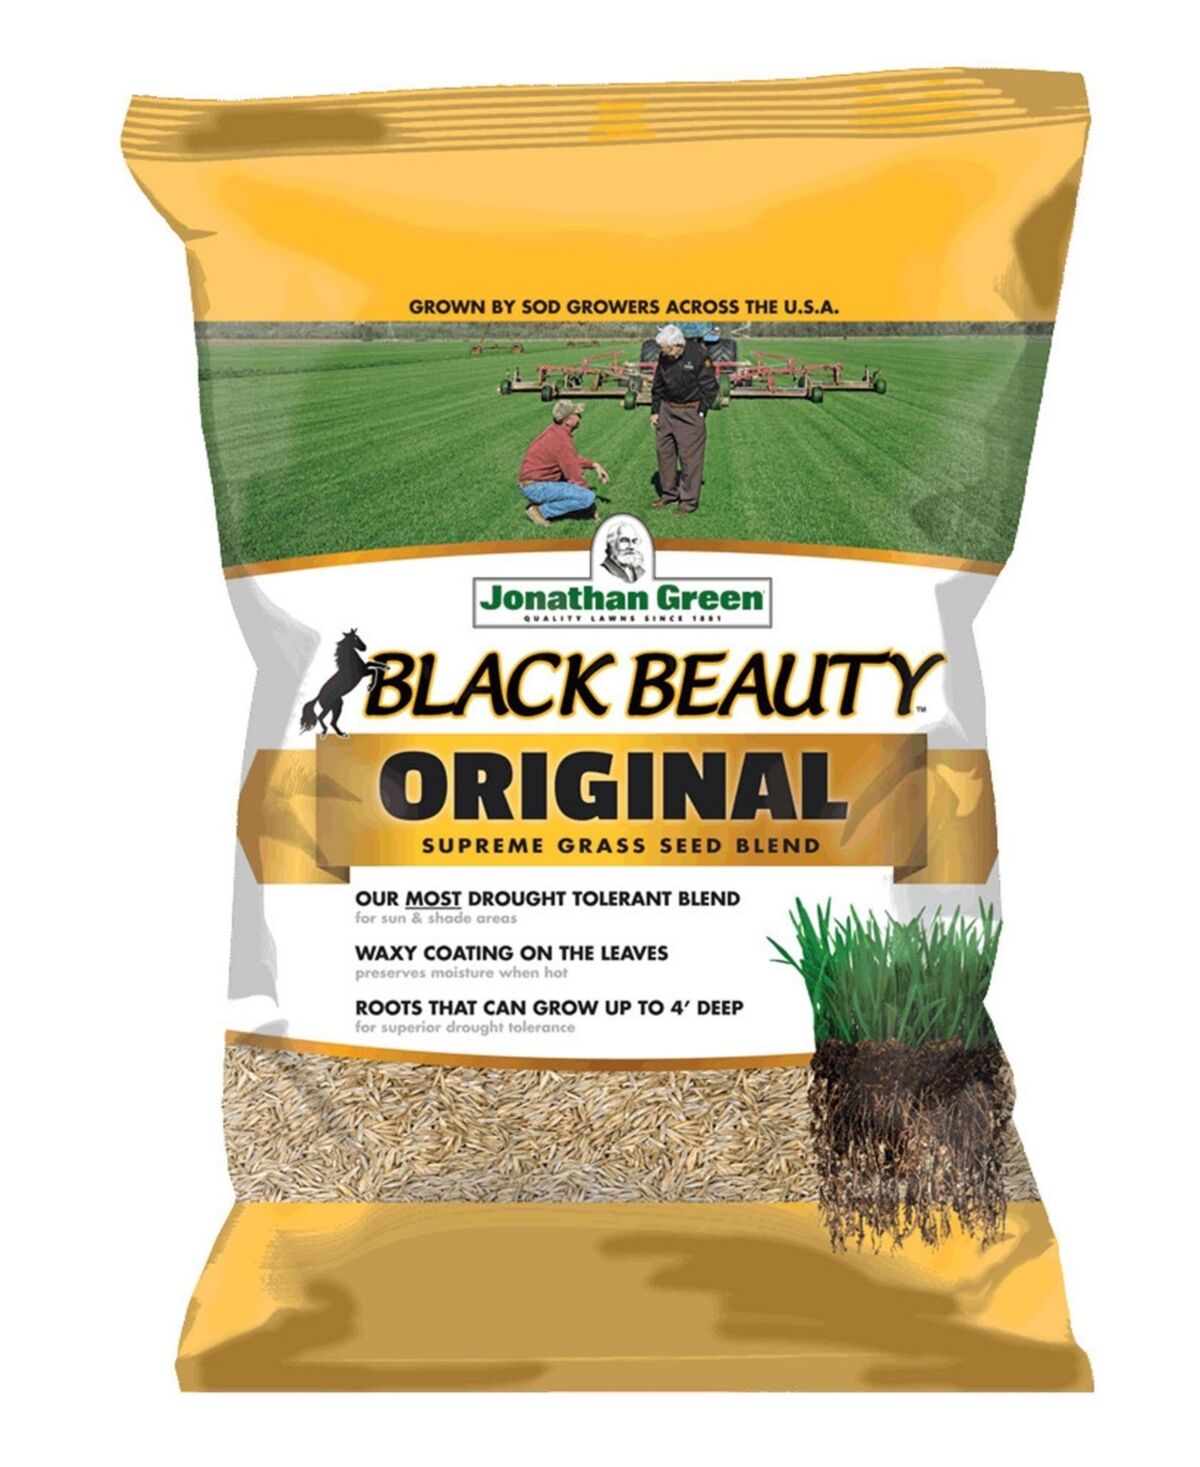 Jonathan Green (#10315) Black Beauty Original Grass Seed, 25 lb bag - Brown